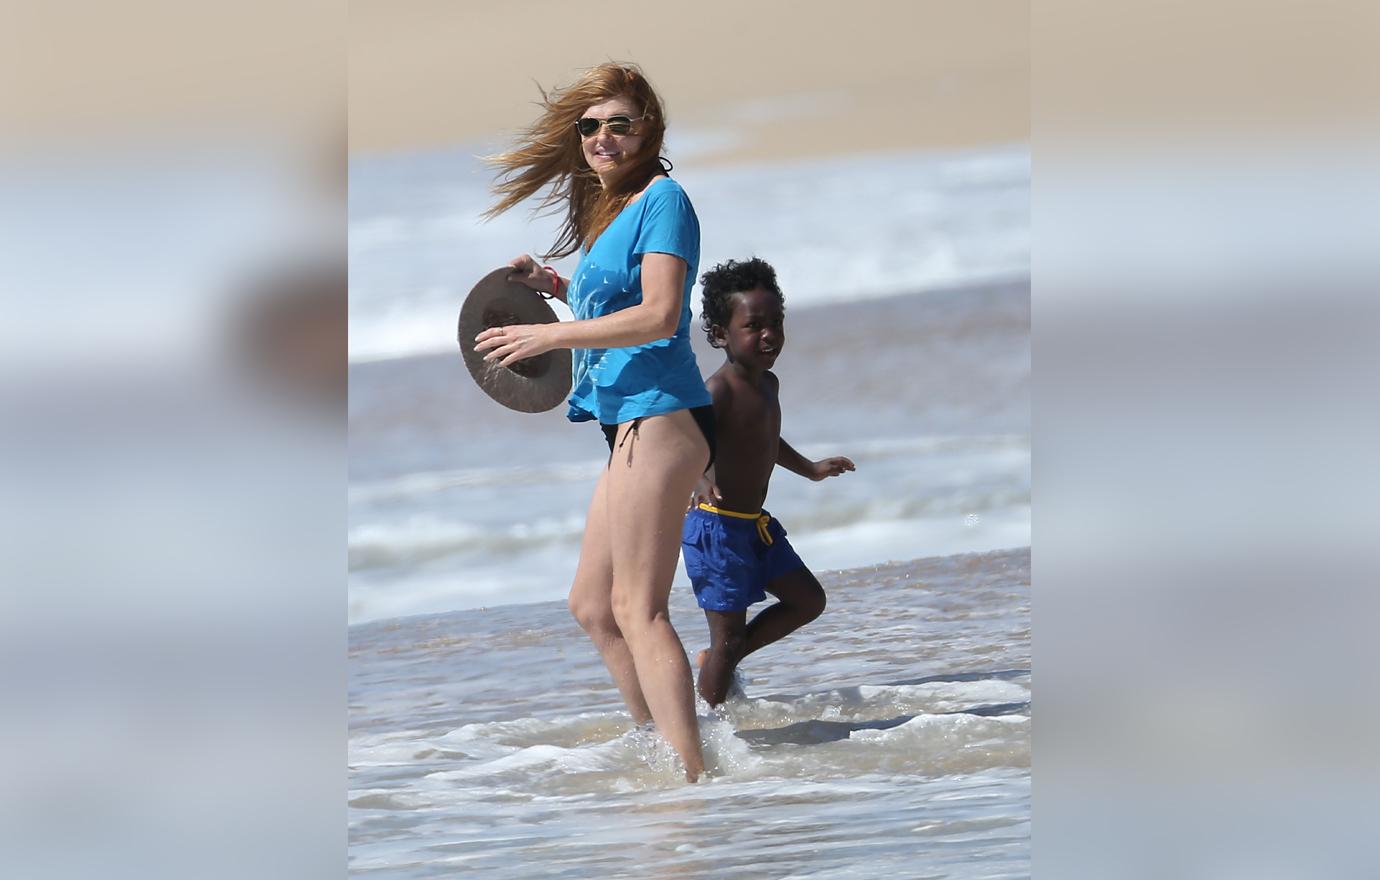 [pics] Connie Britton Nashville Bikini Beach Tv Character Dead Actress On Vacation In Mexico